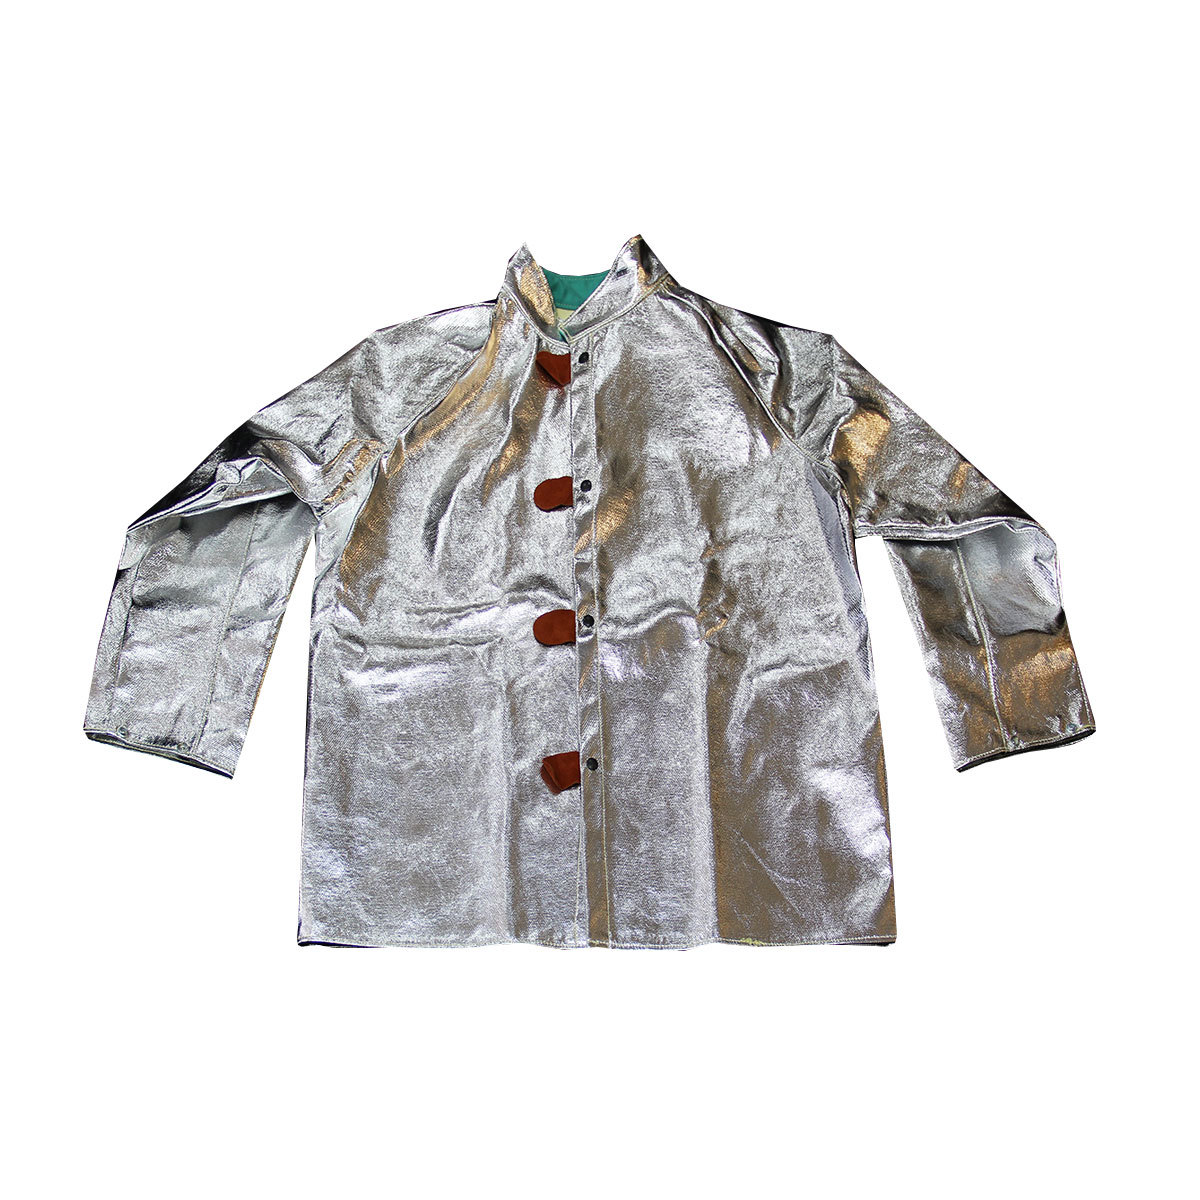 Chicago Protective Apparel Medium Silver Aluminized Para-Aramid Blend Heat Resistant Jacket